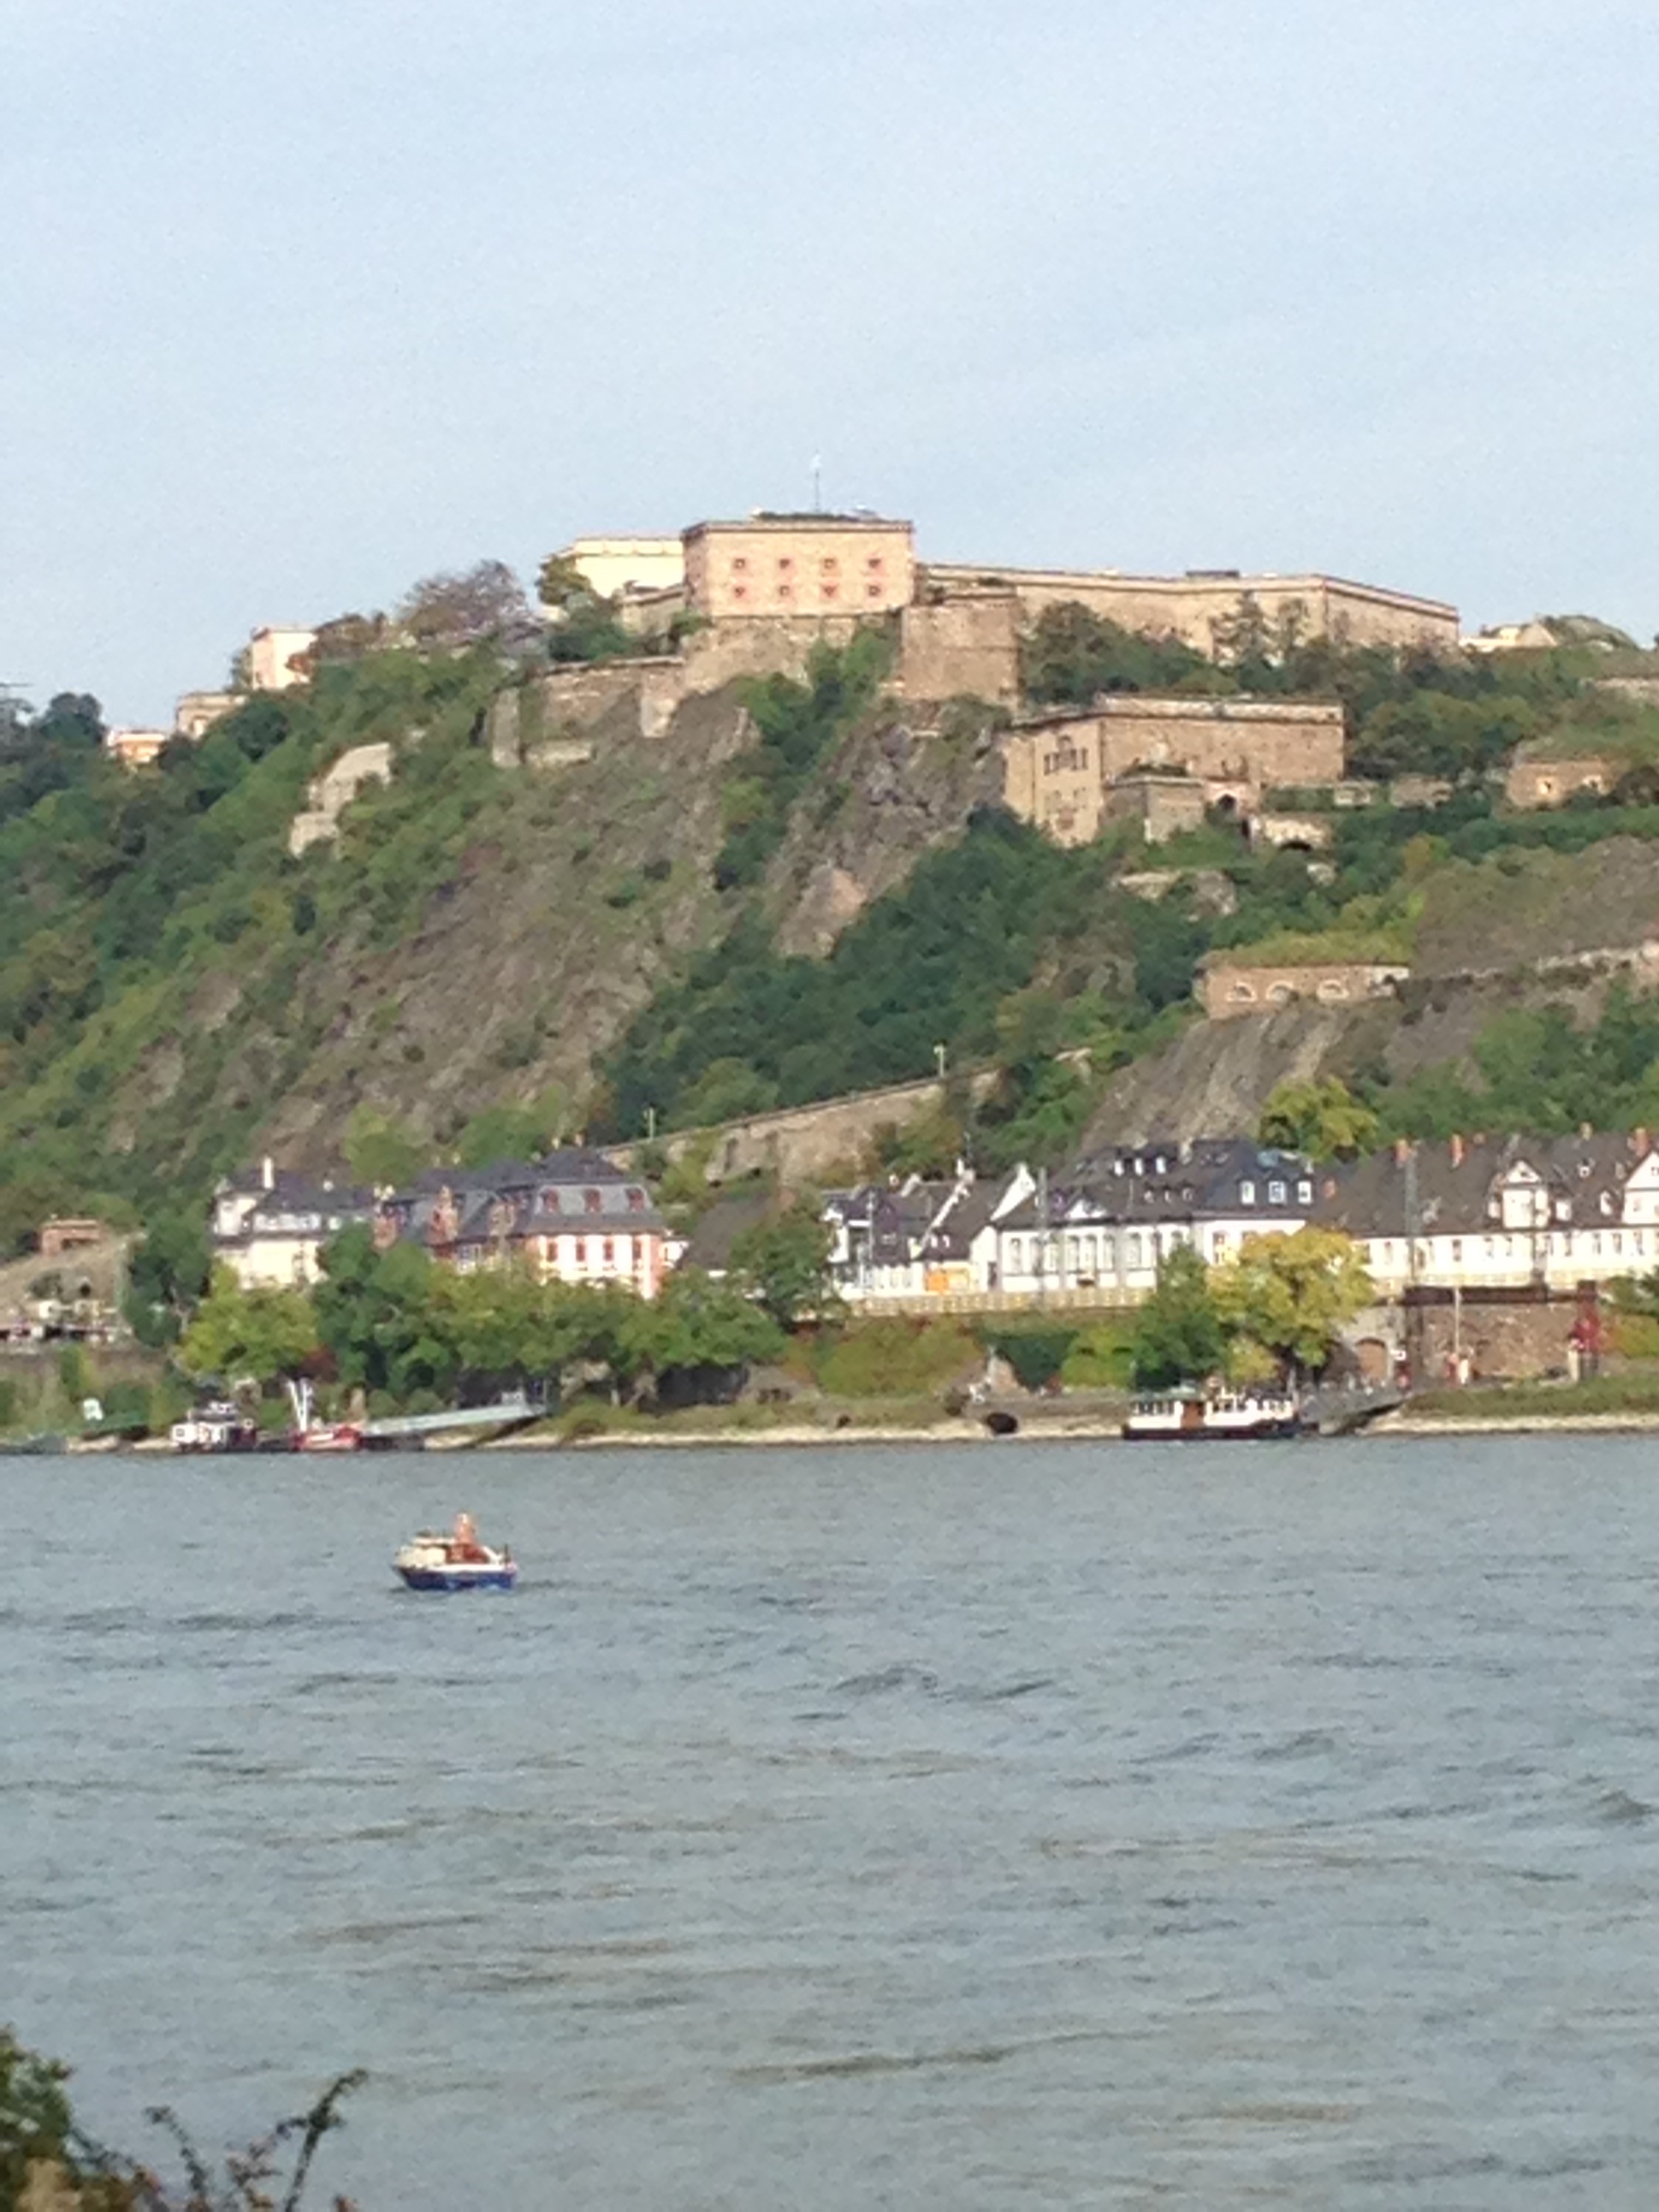 Across from Koblenz